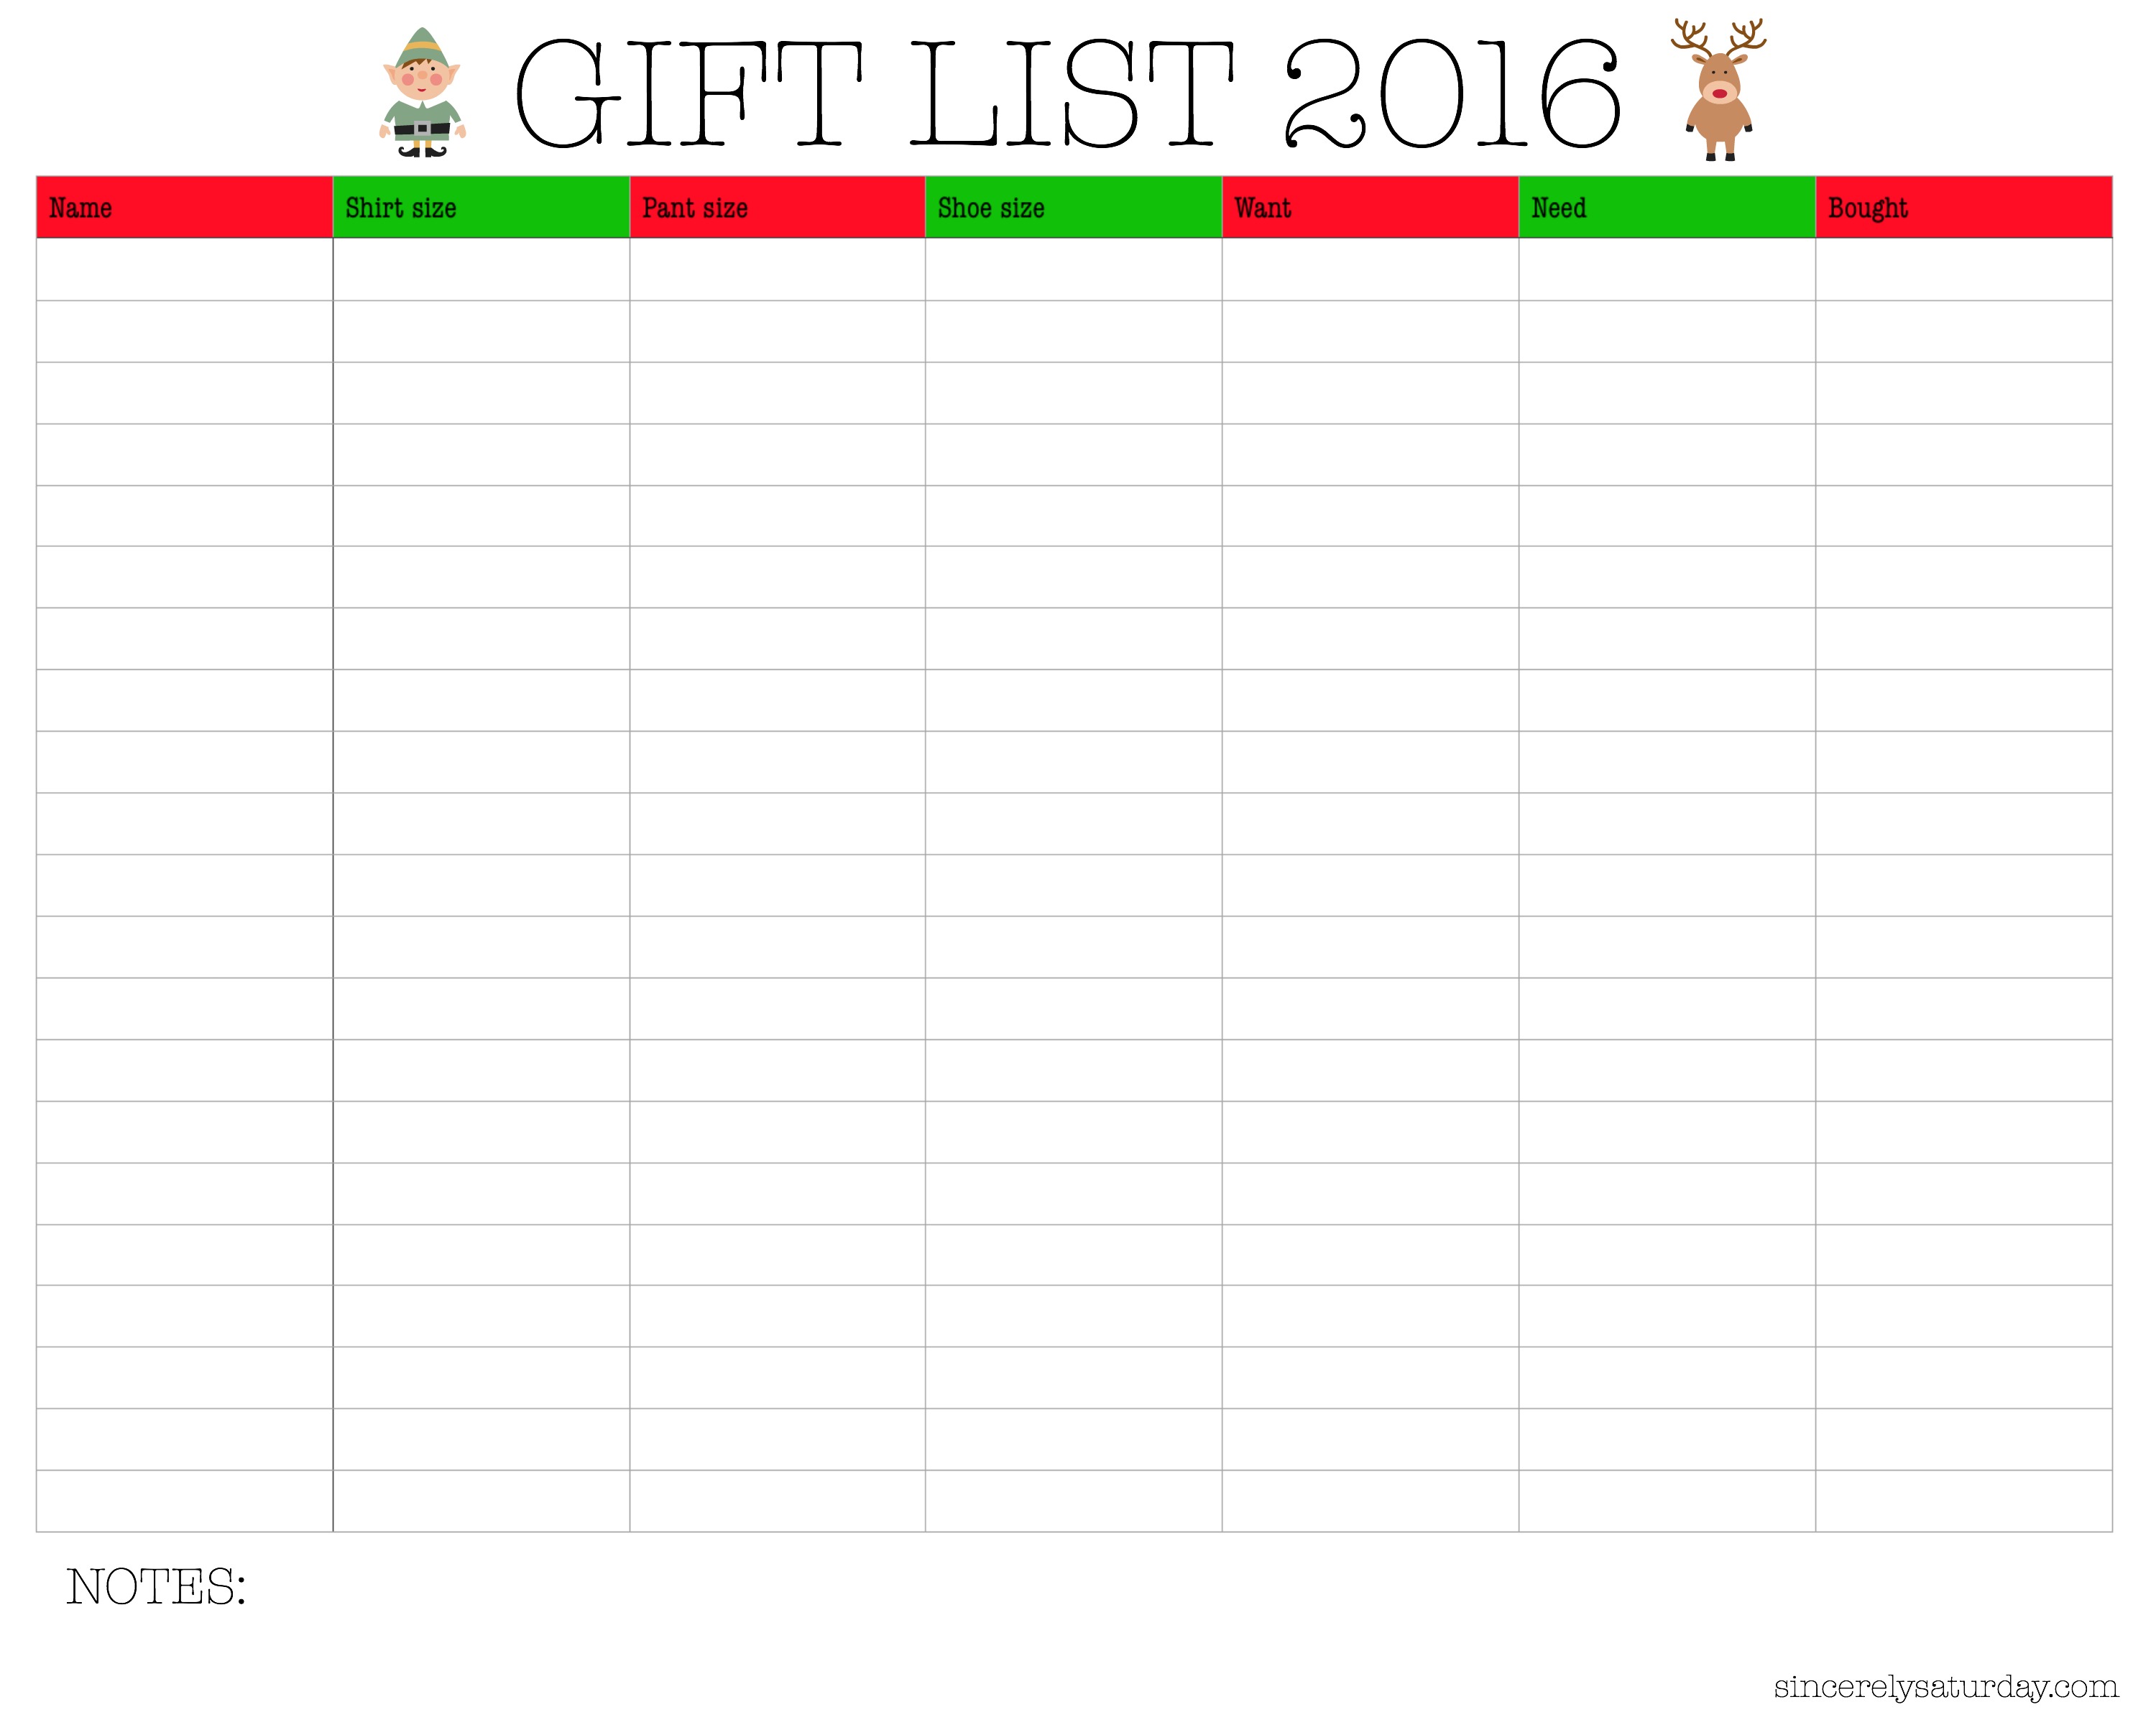 gift-list-2